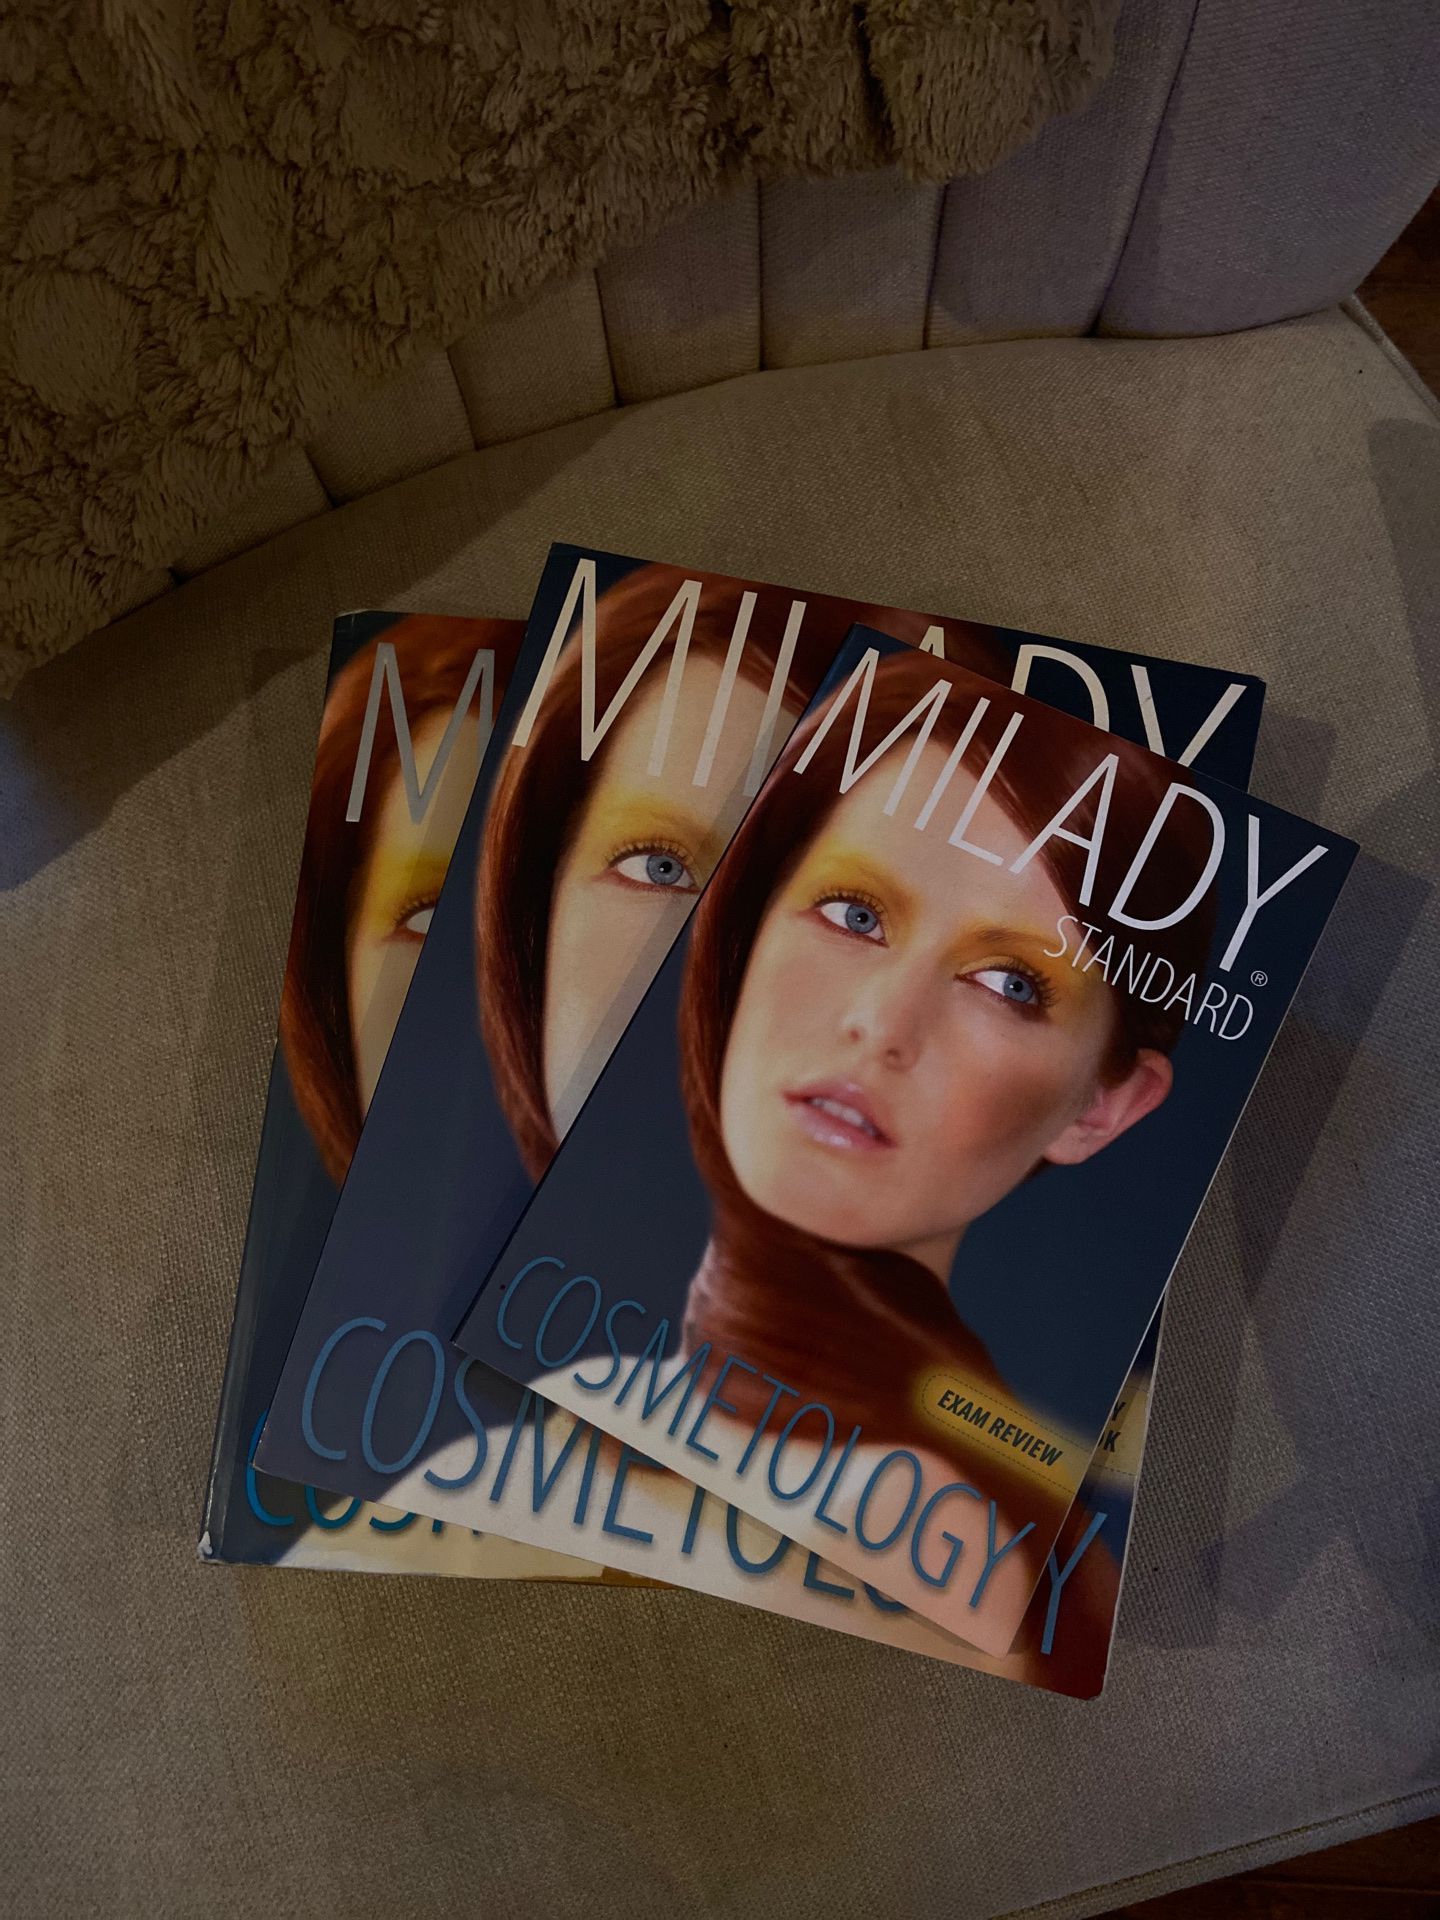 2012 Milady Cosmetology books